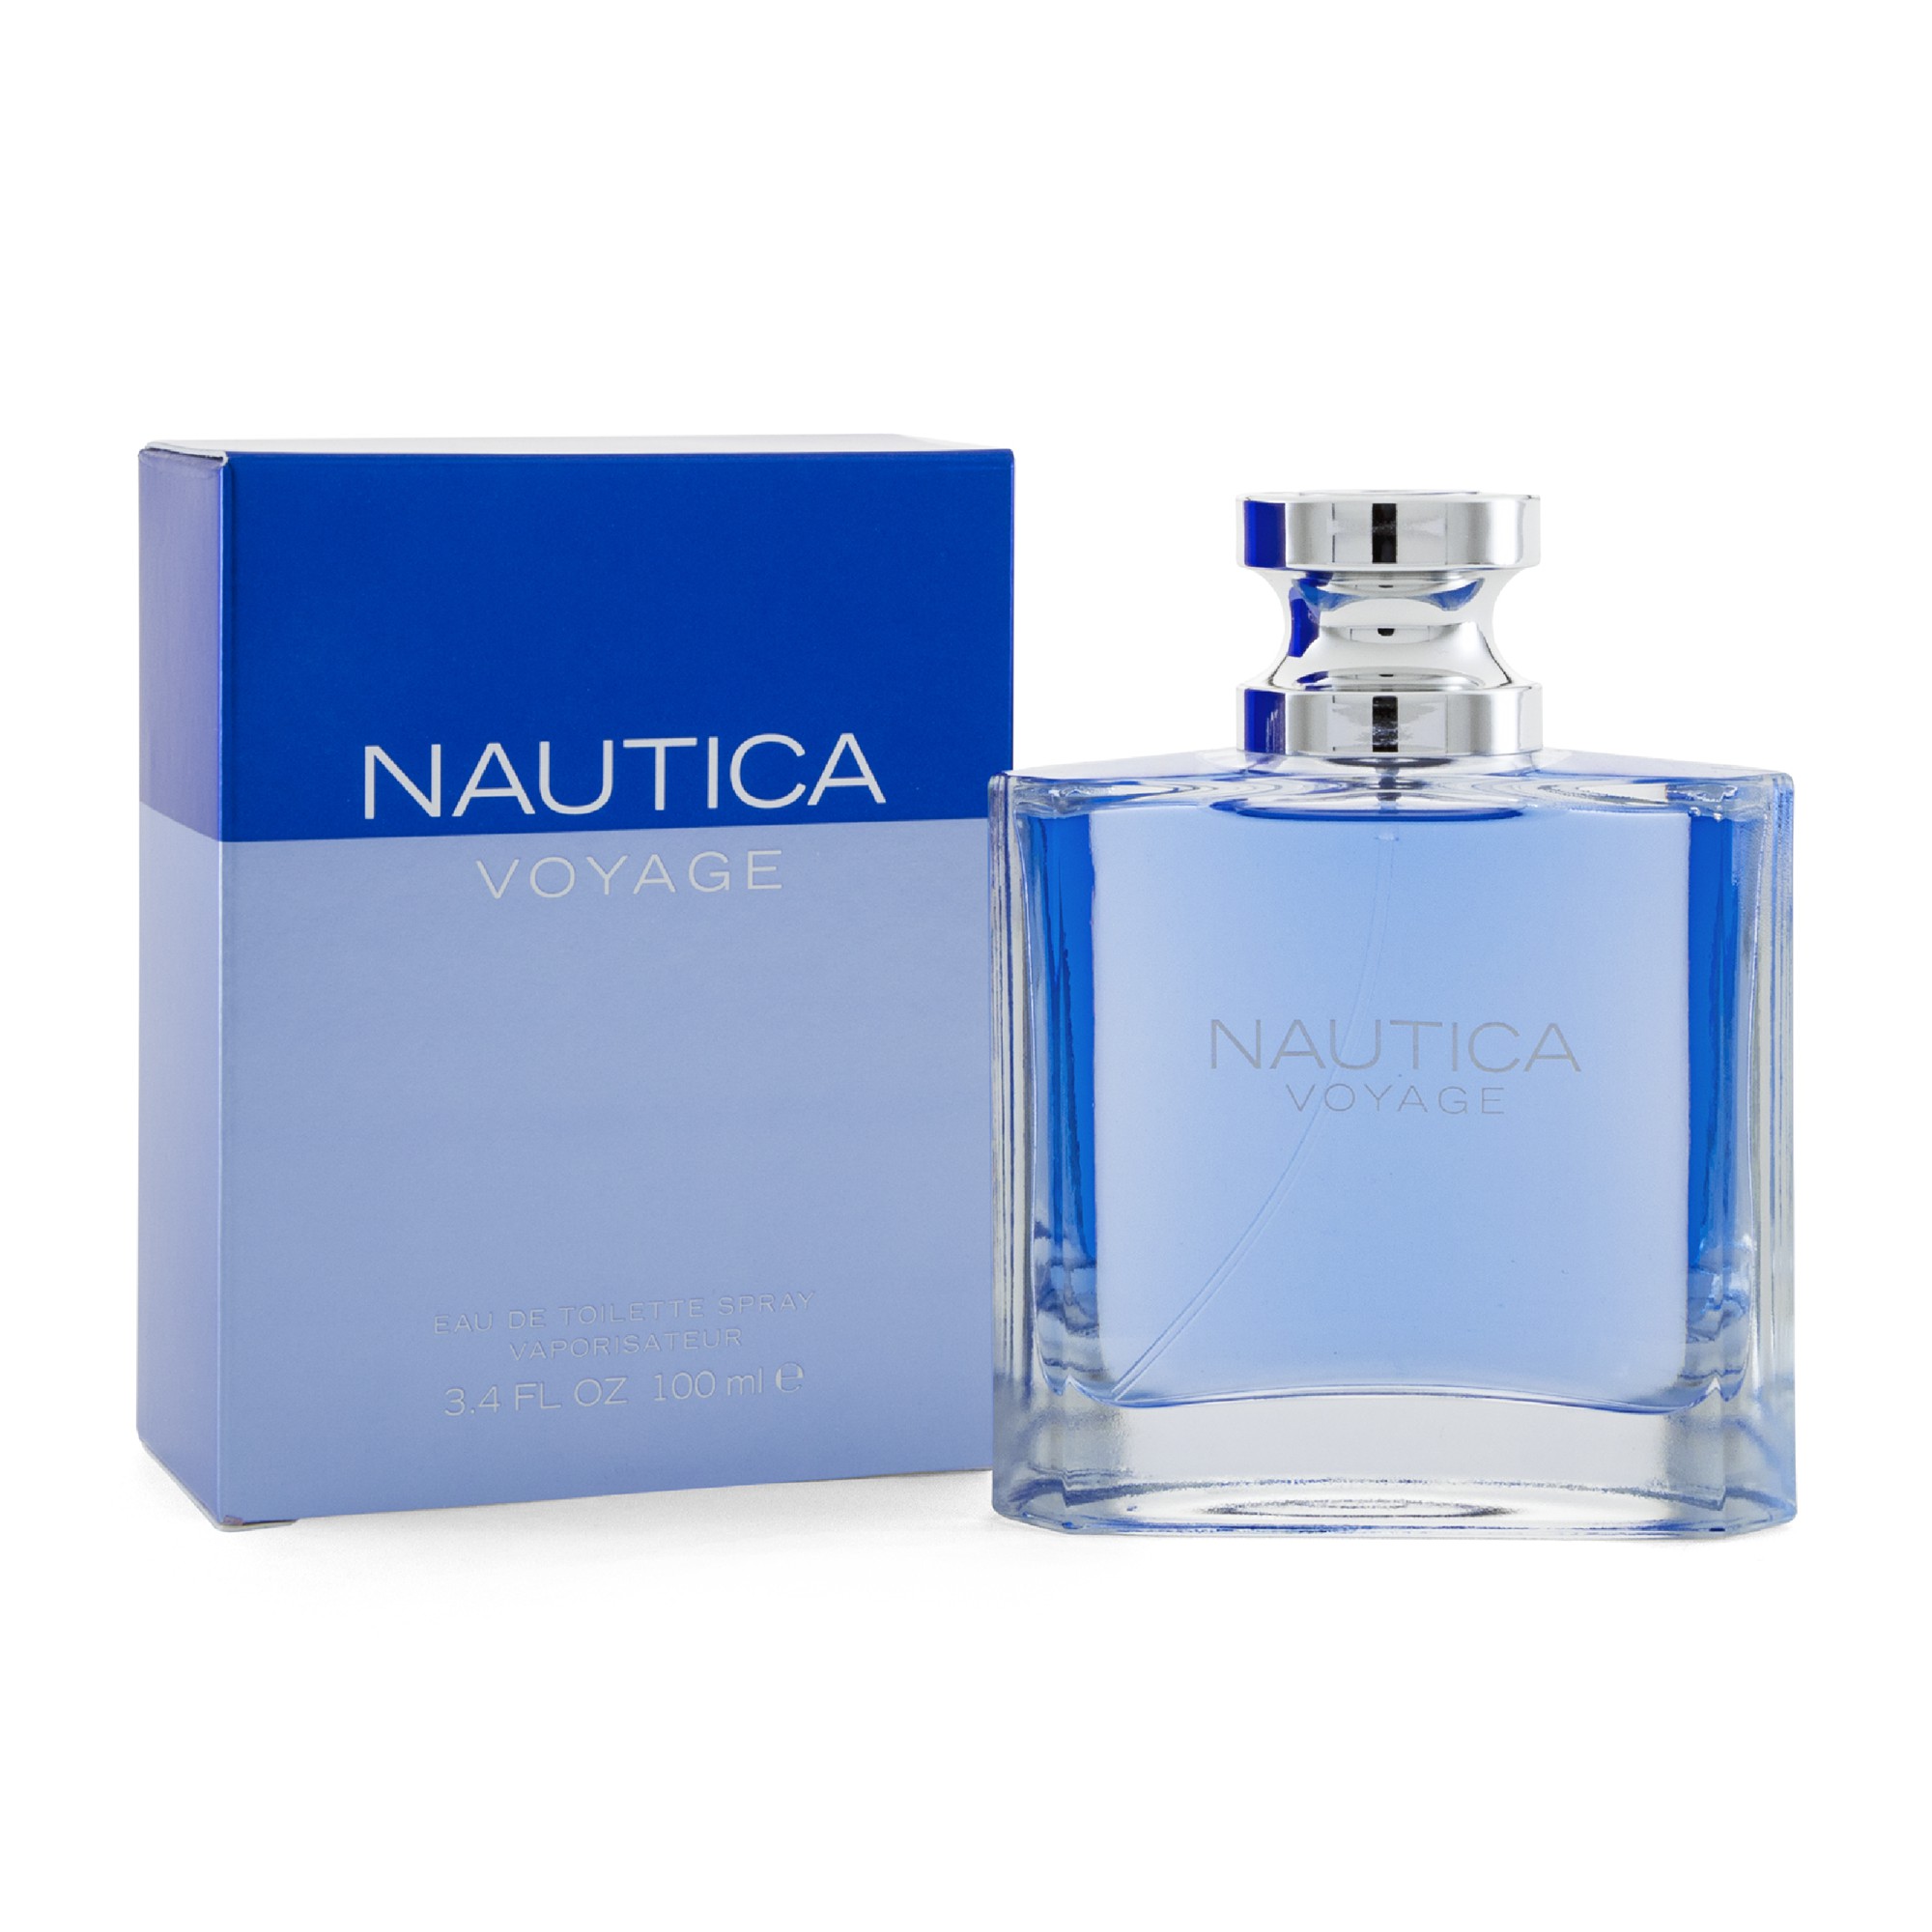 perfume like nautica voyage